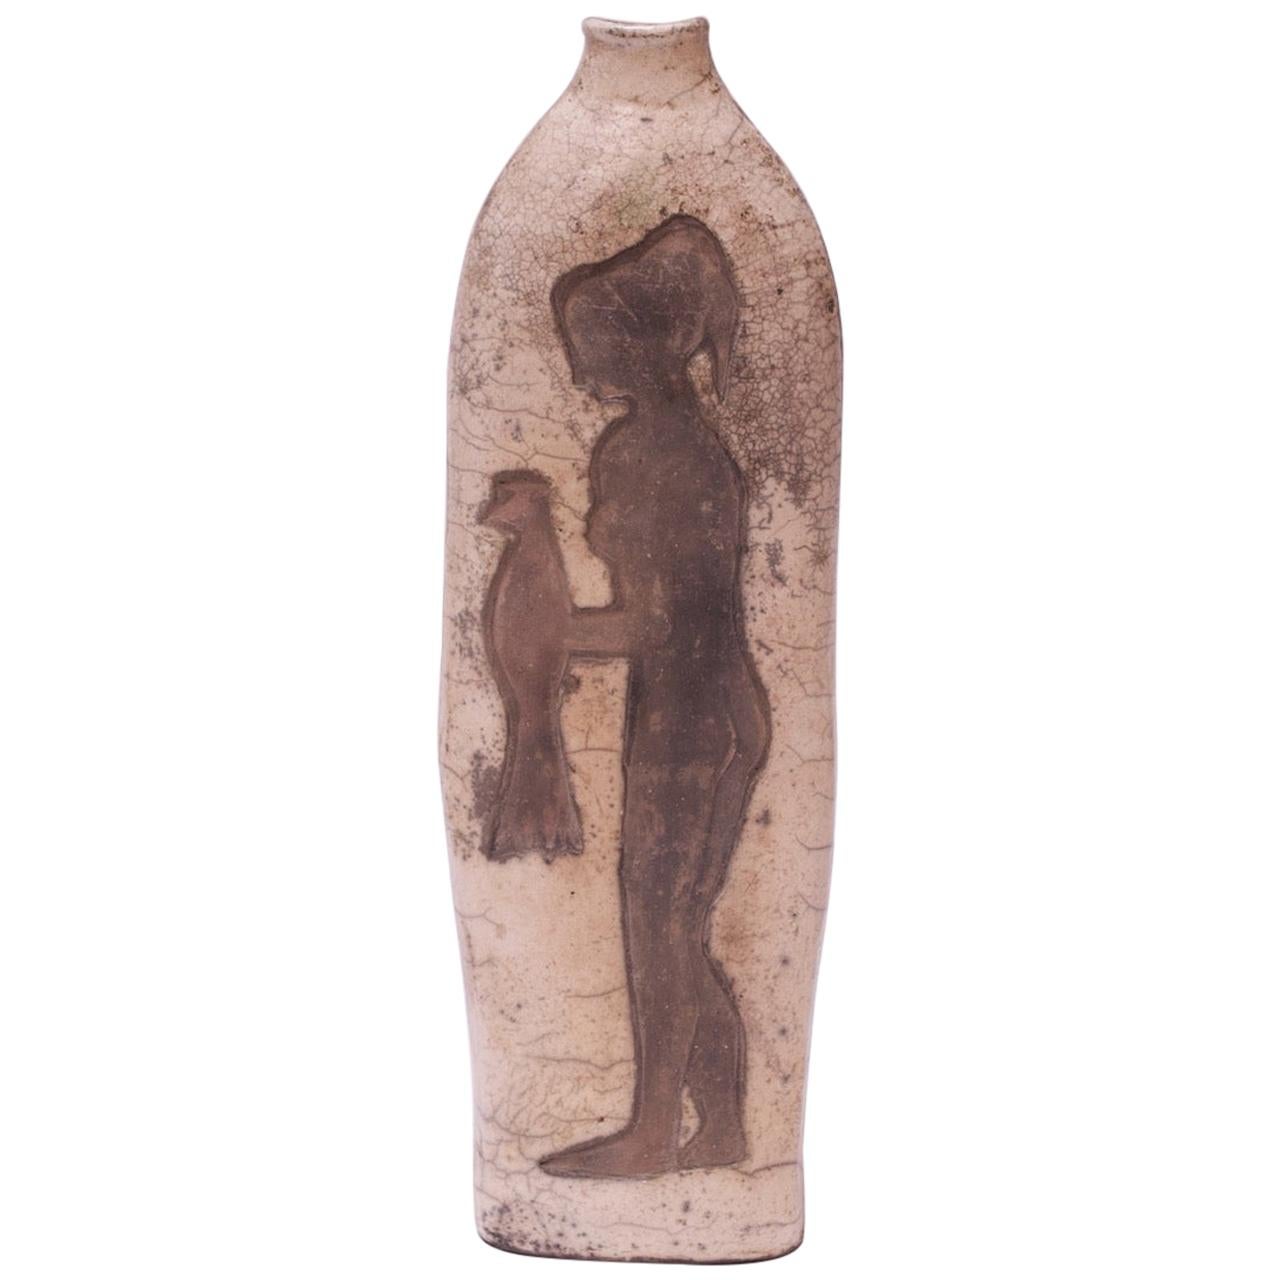 Primitive Studio Ceramic "Woman with Bird" Vase Signed Pollack, 1972